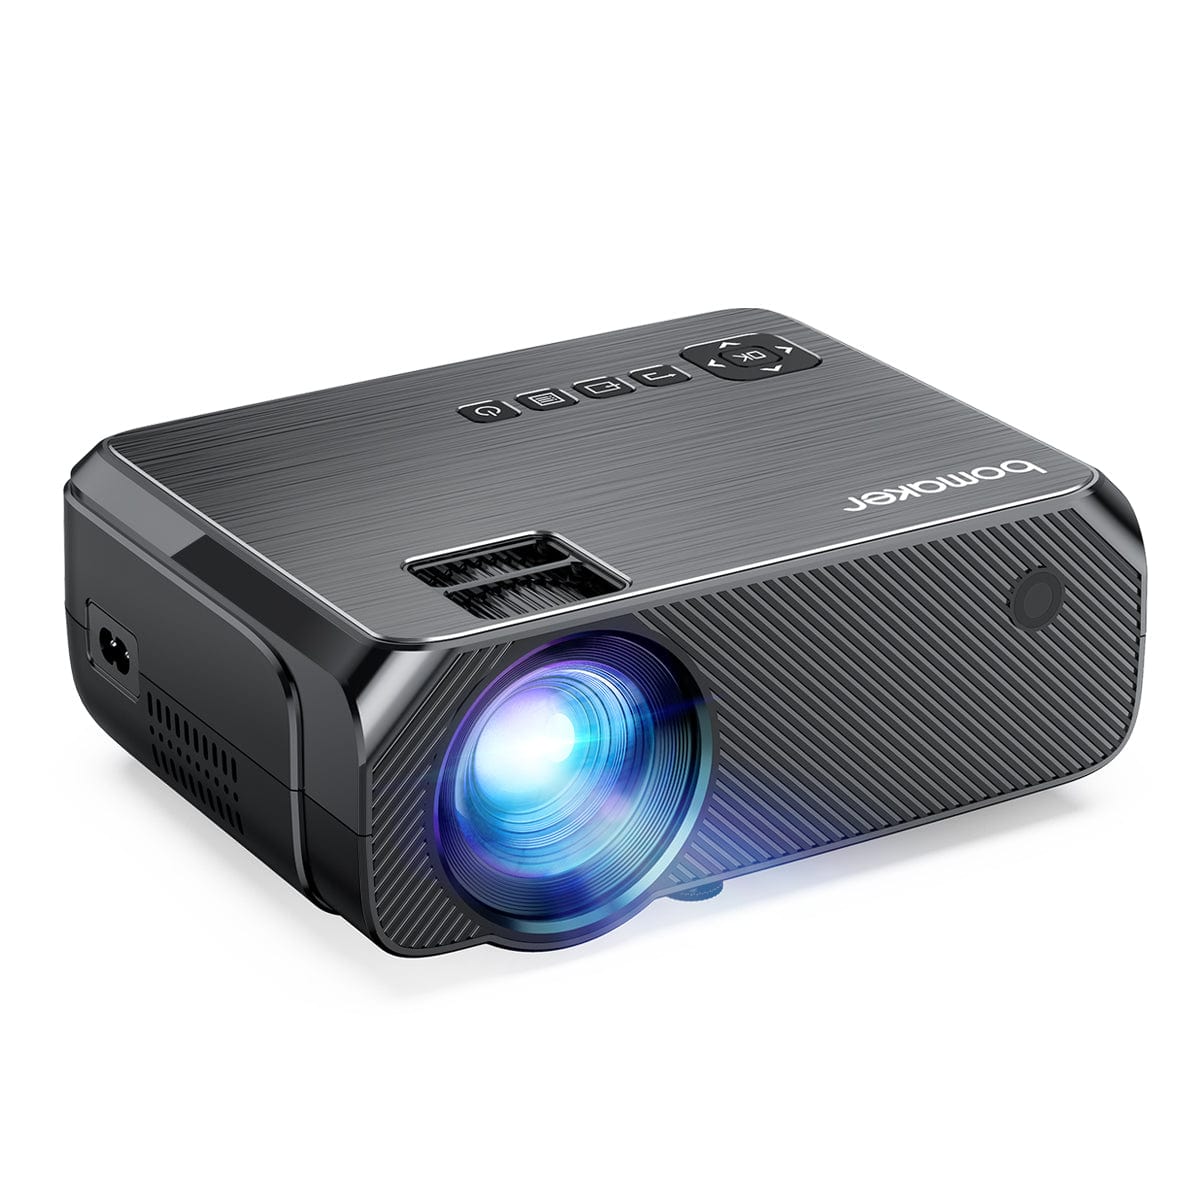 Bomaker 200 ANSI Lumen Wi - Fi mini Projector upgrade Full HD 1080p - - gc355, Gray